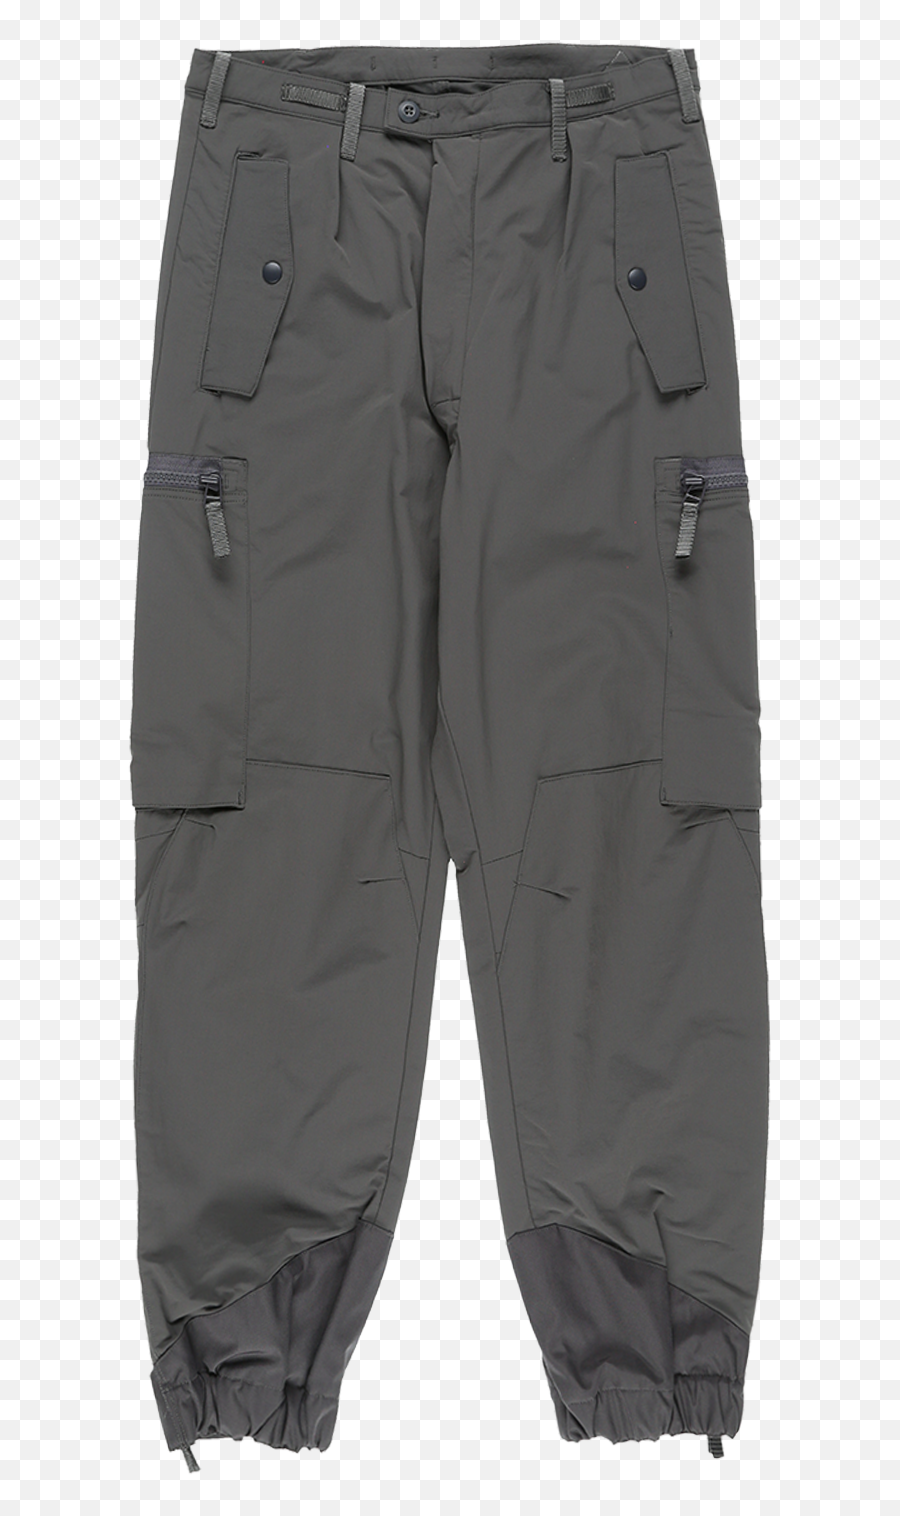 Cav Empt Ranger Pants - Cargo Pants Png,Cav Empt Icon Pullover